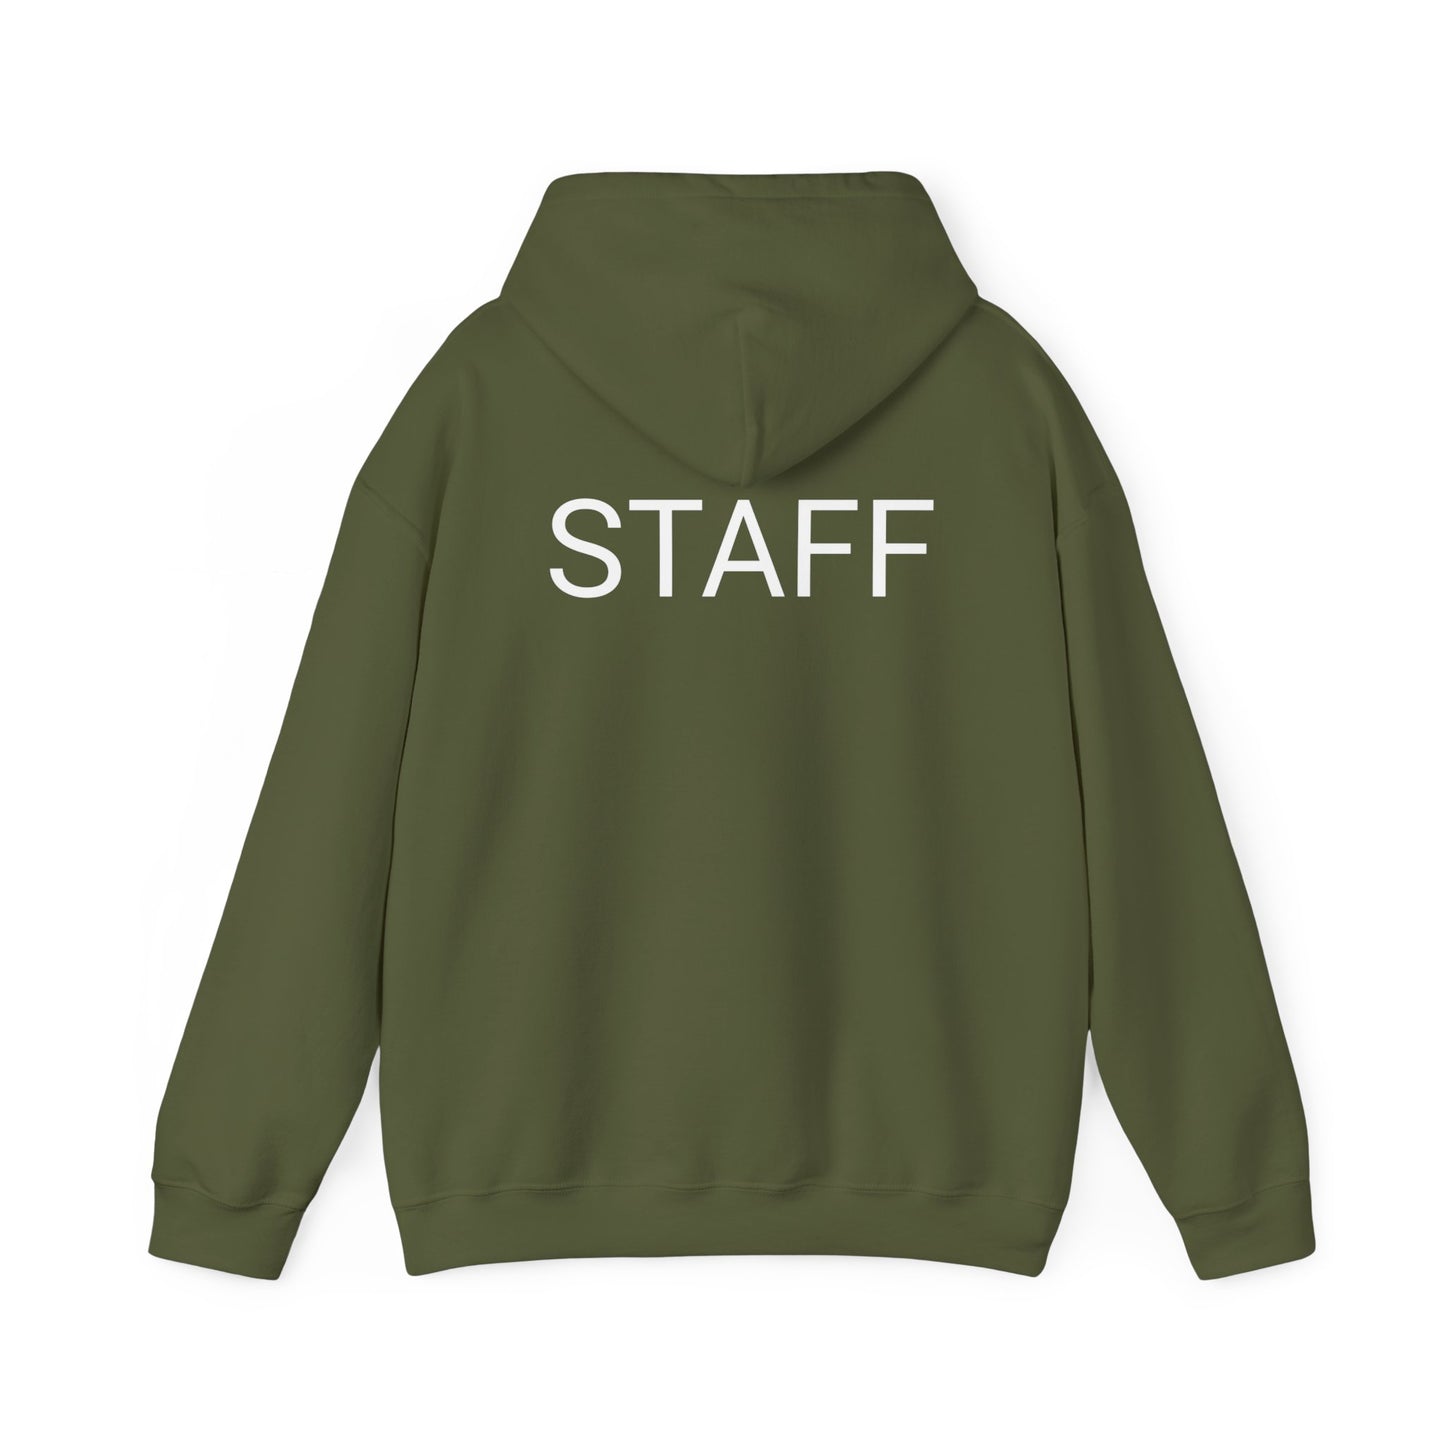 leClub Limited™ Hooded Sweatshirt